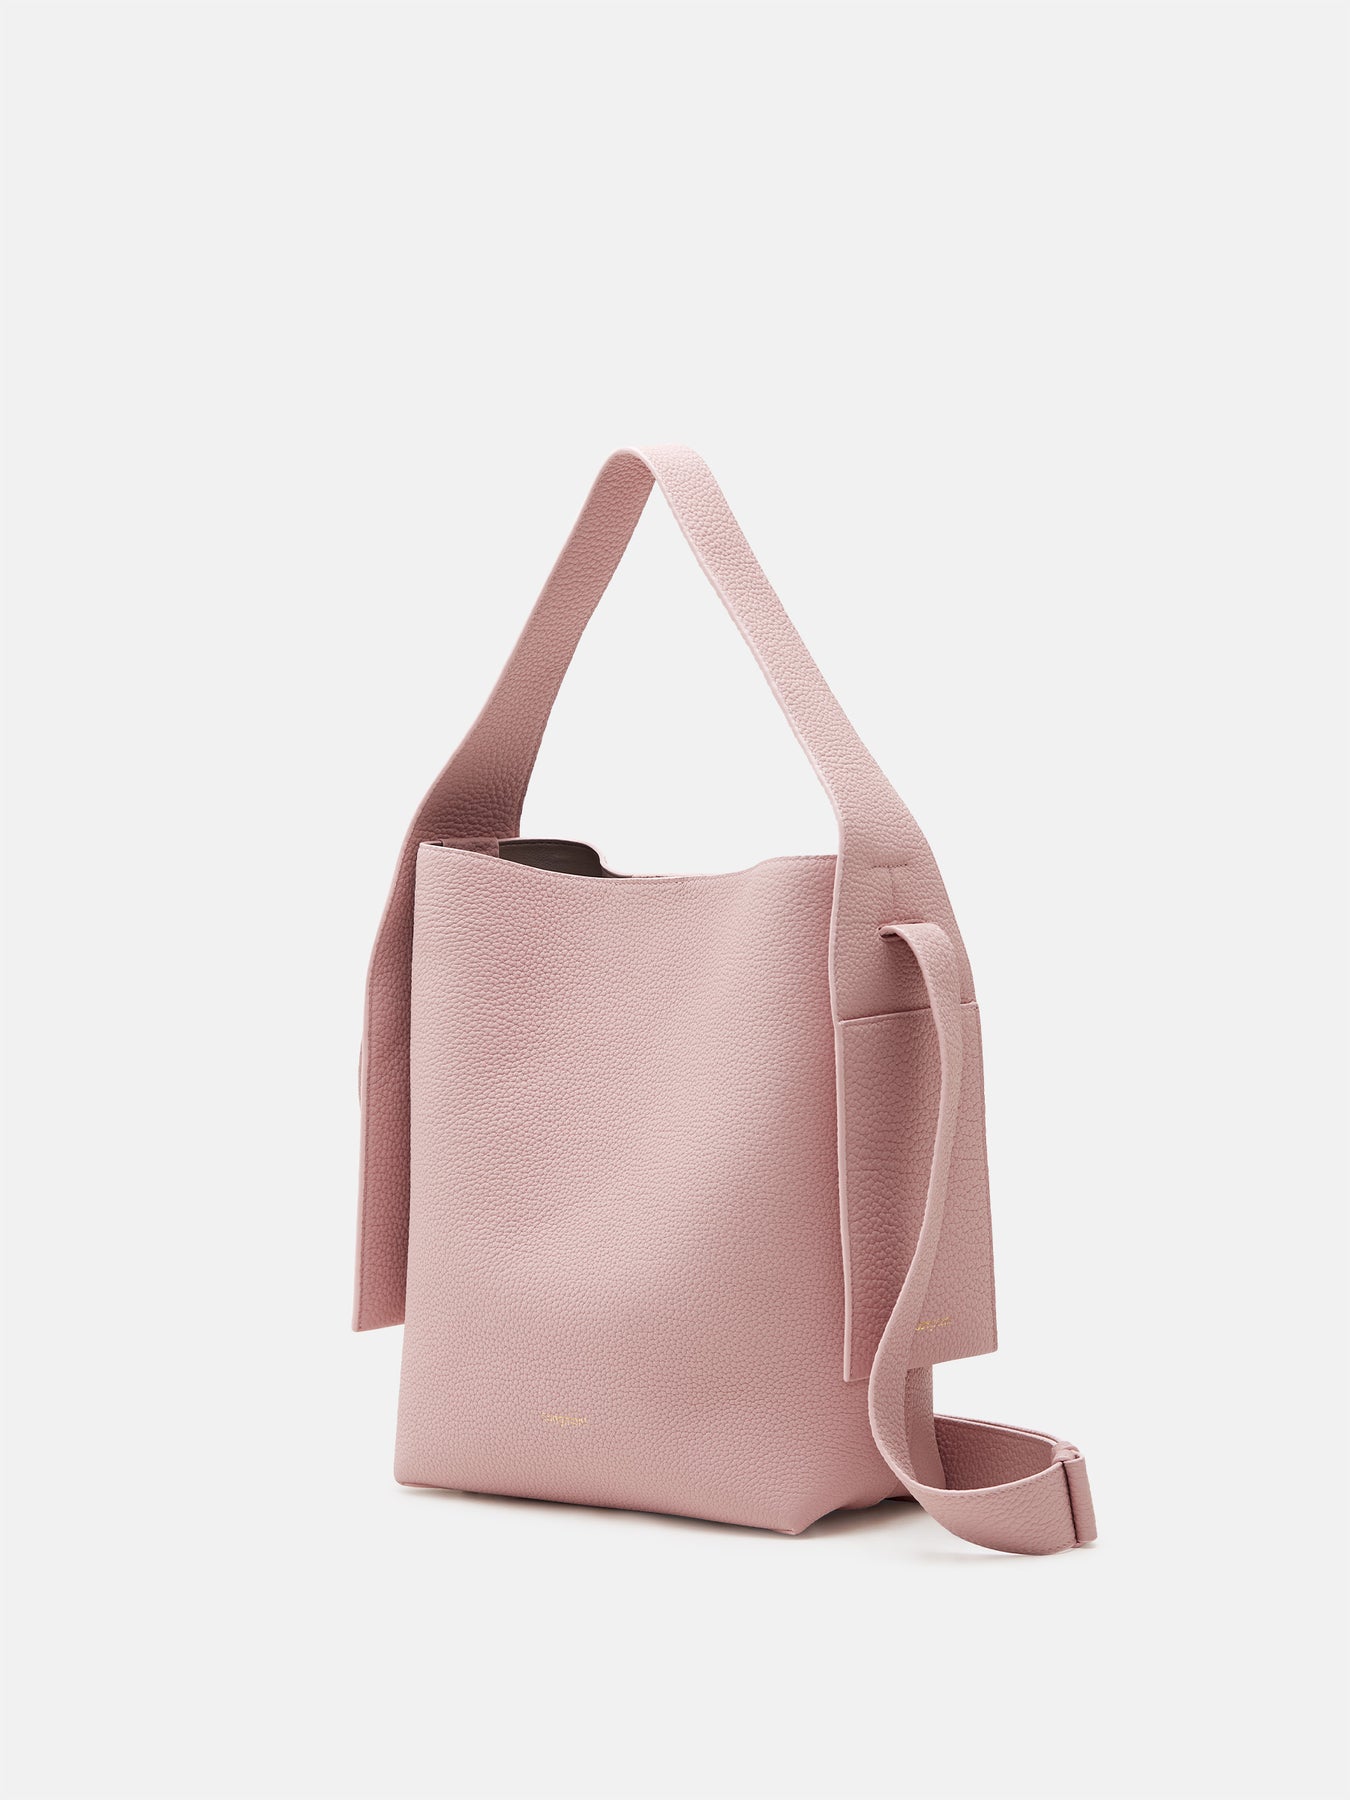 Drippy Bag | Medium Leather Tote Bag | Songmont